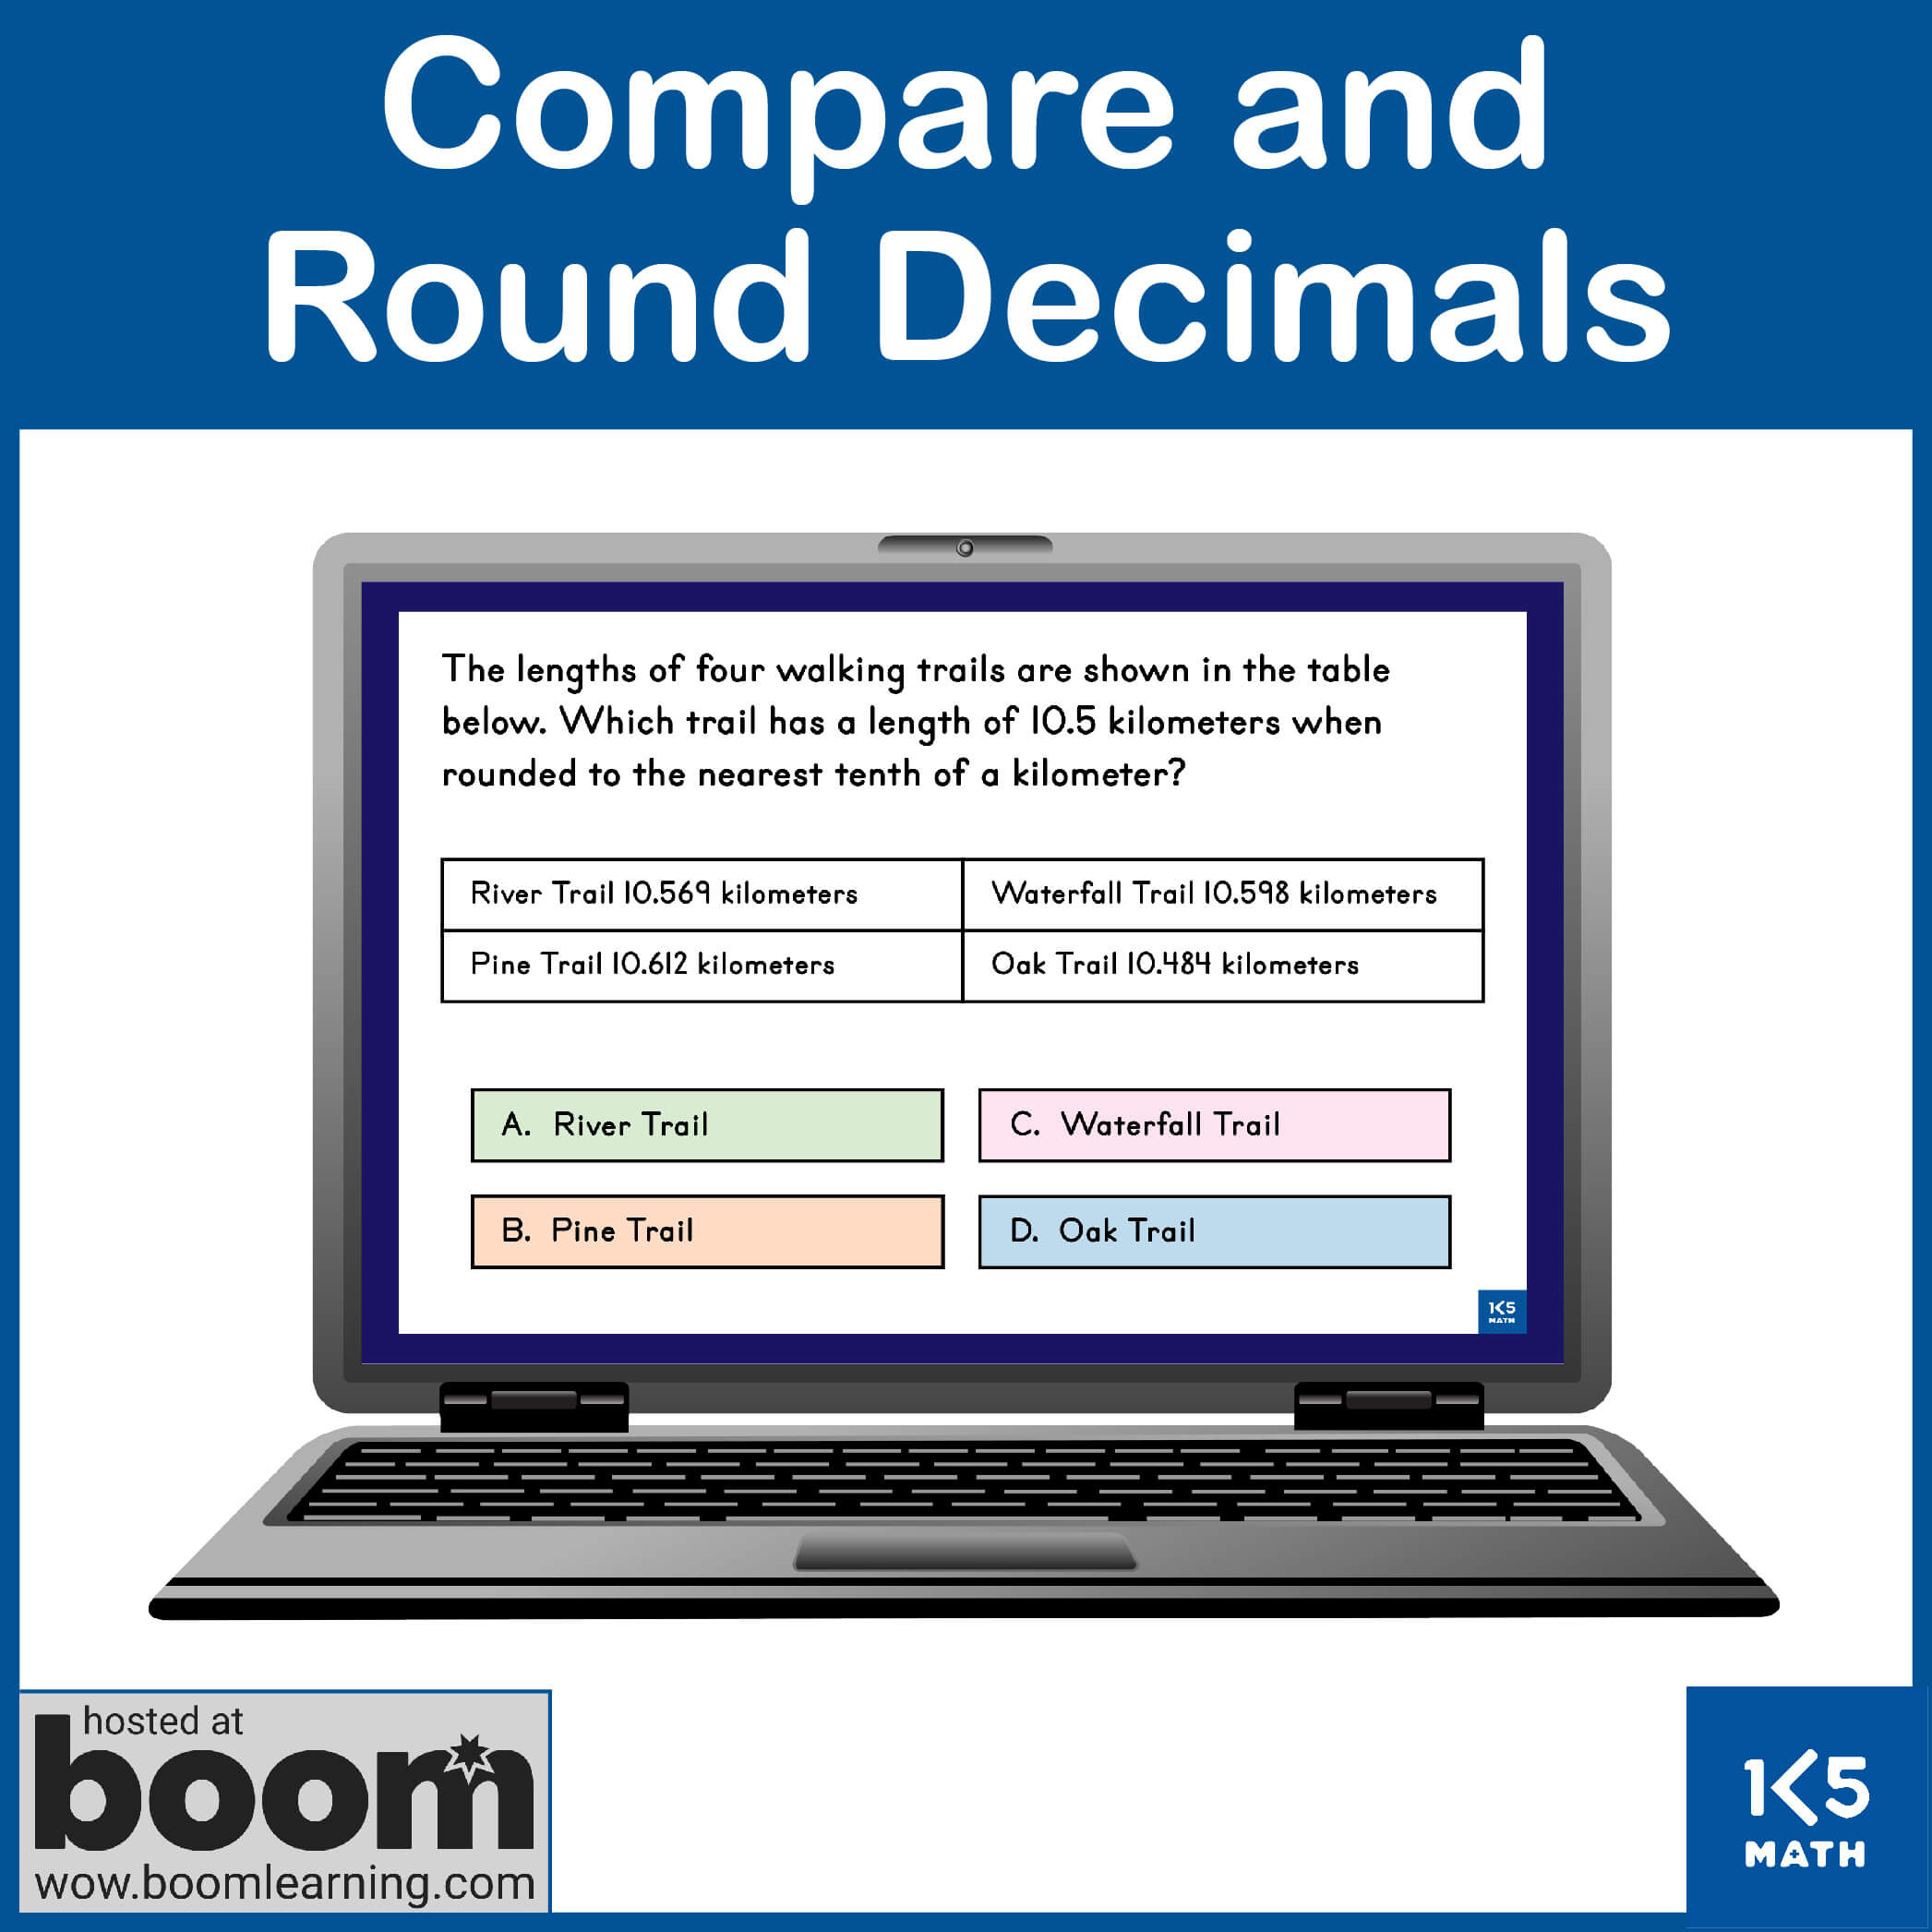 Boom Cards: Compare and Round Decimals